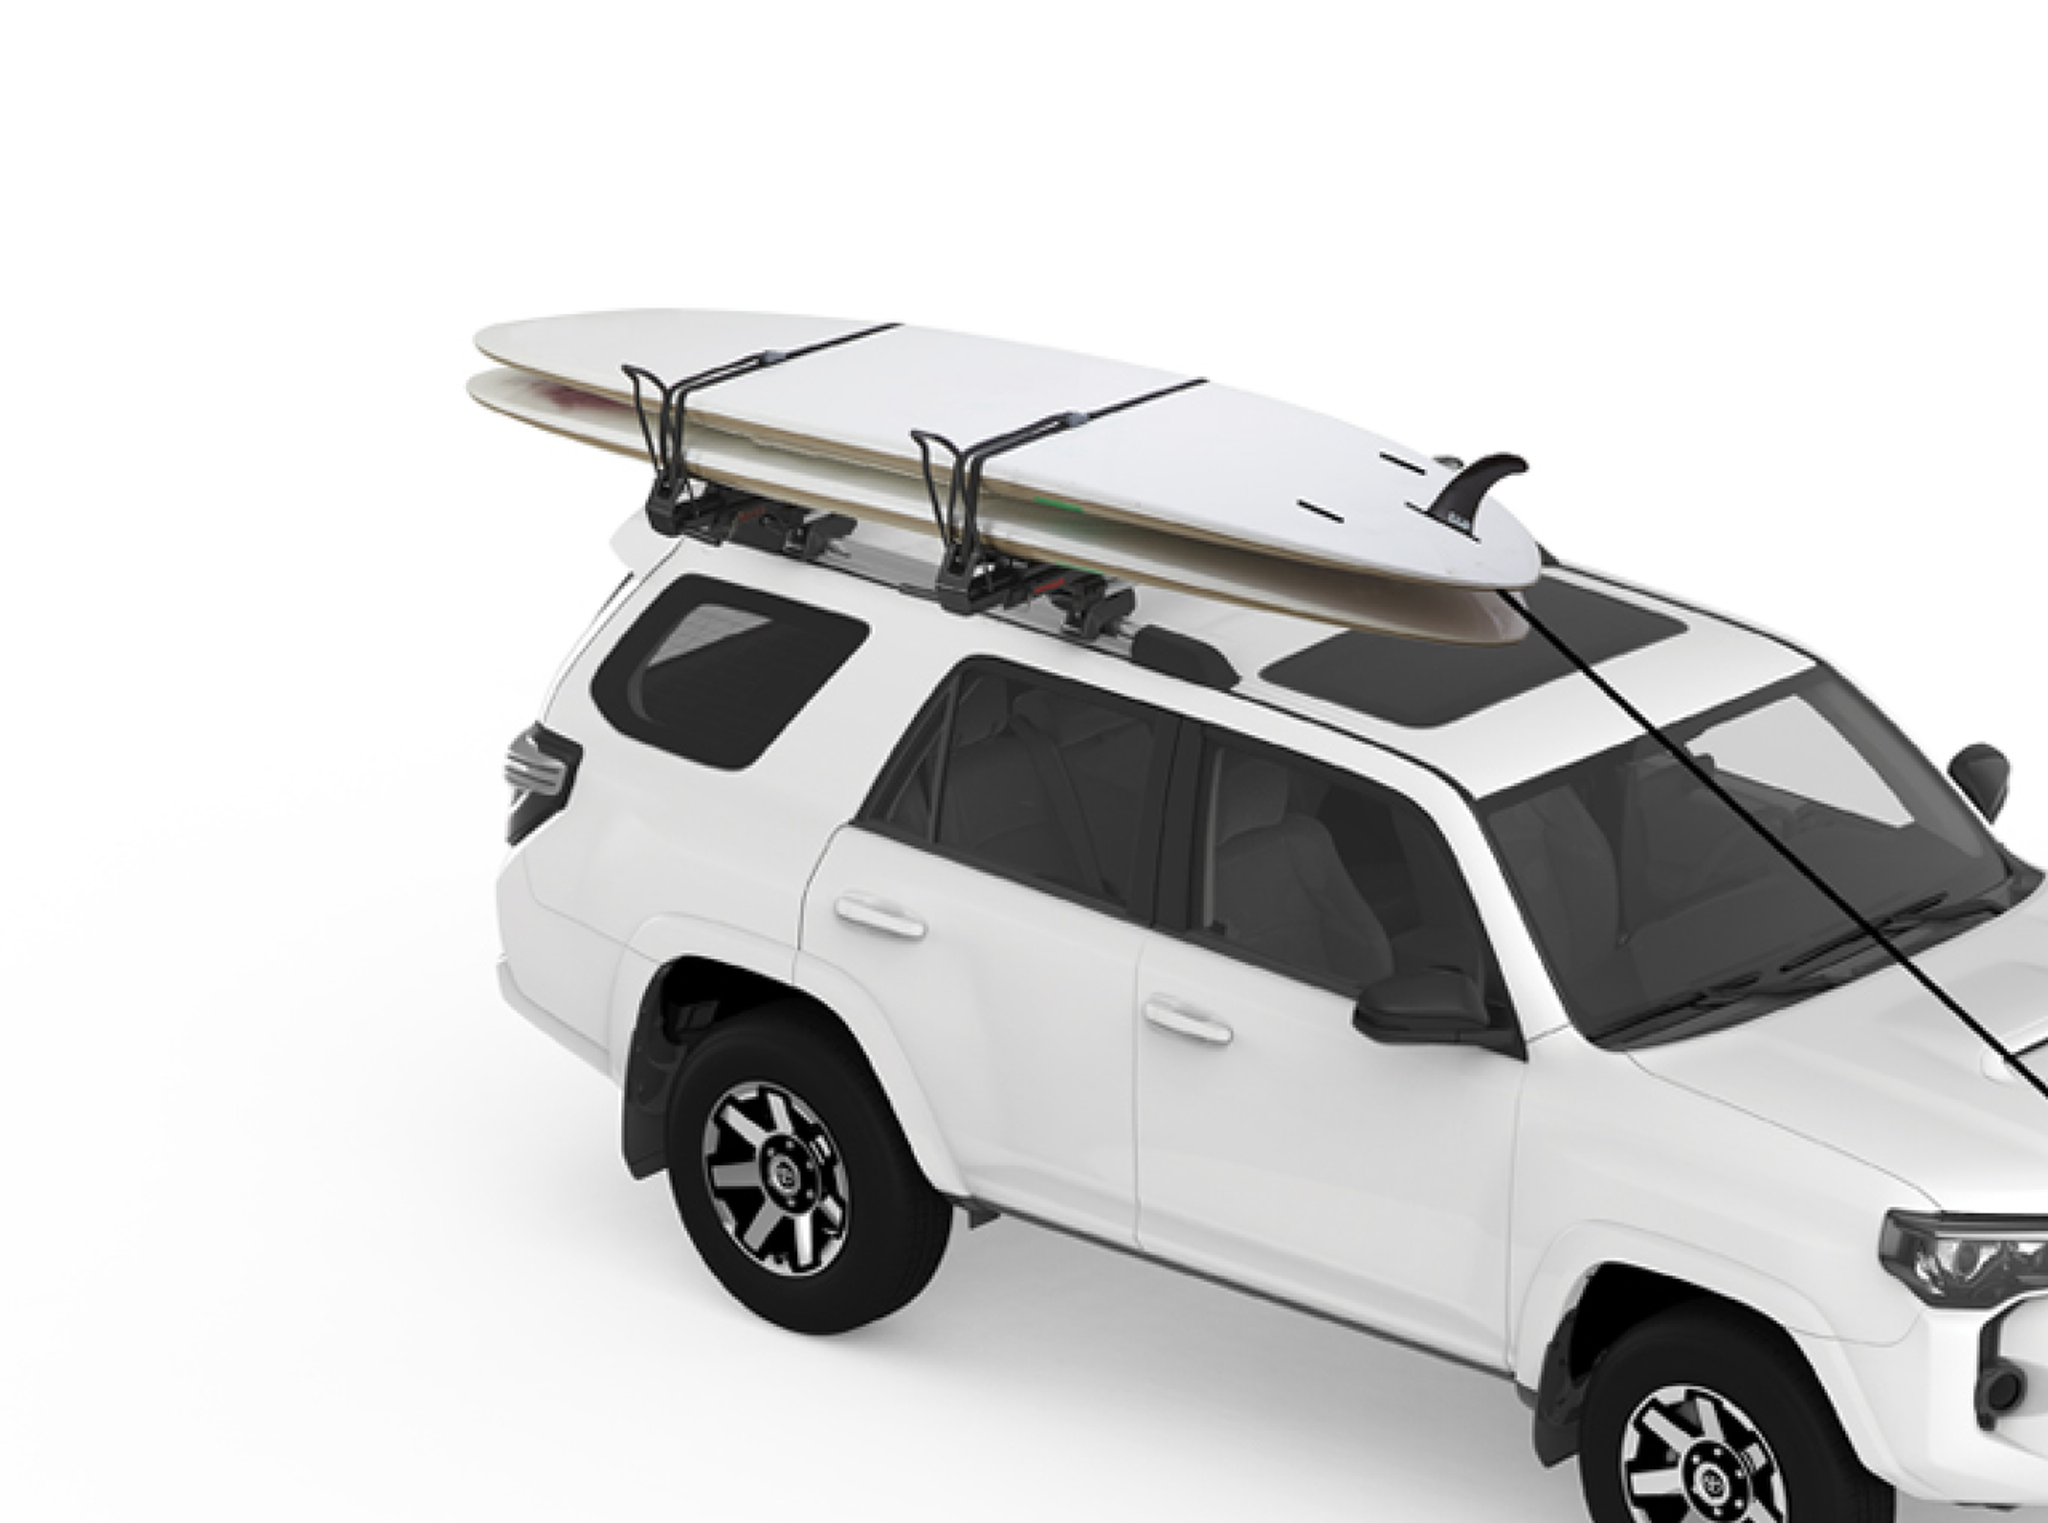 Pair Of Yakima Showdown Kayak Roof Racks for Sale in Portland